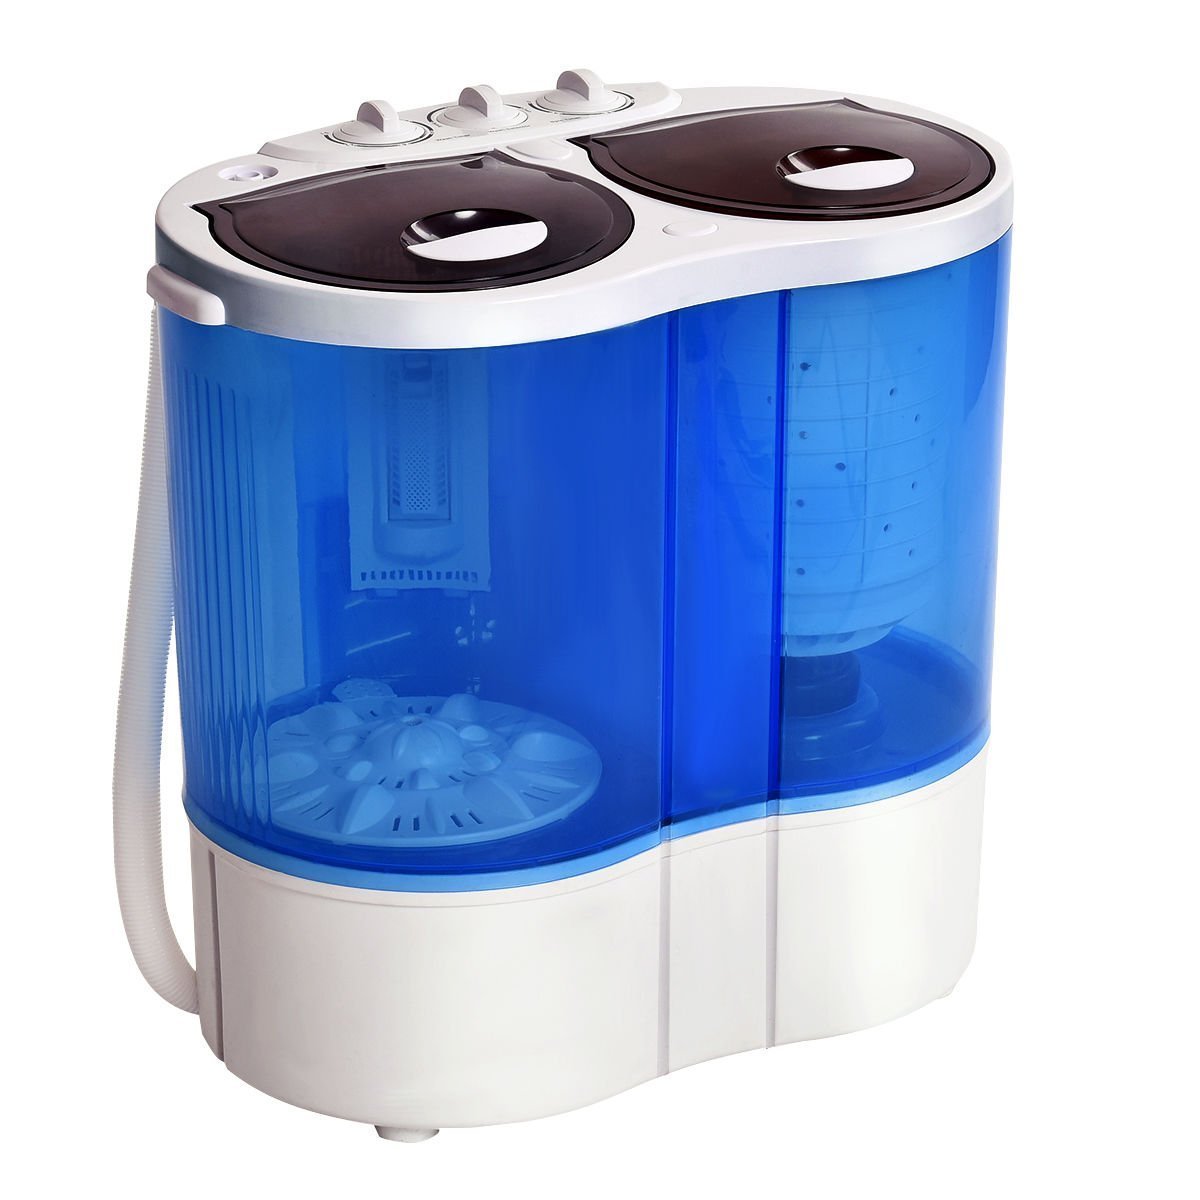 Giantex 15.4 Portable Washing Machine